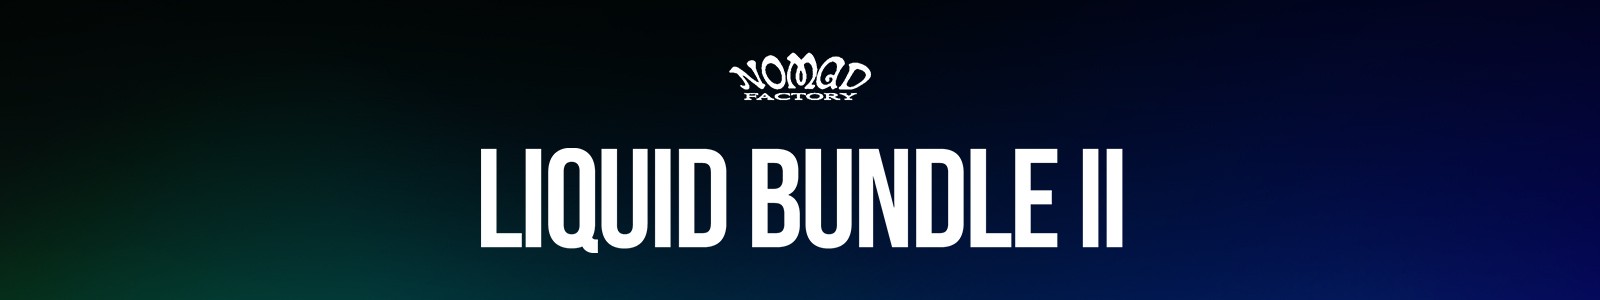 Nomad Factory Liquid Bundle II